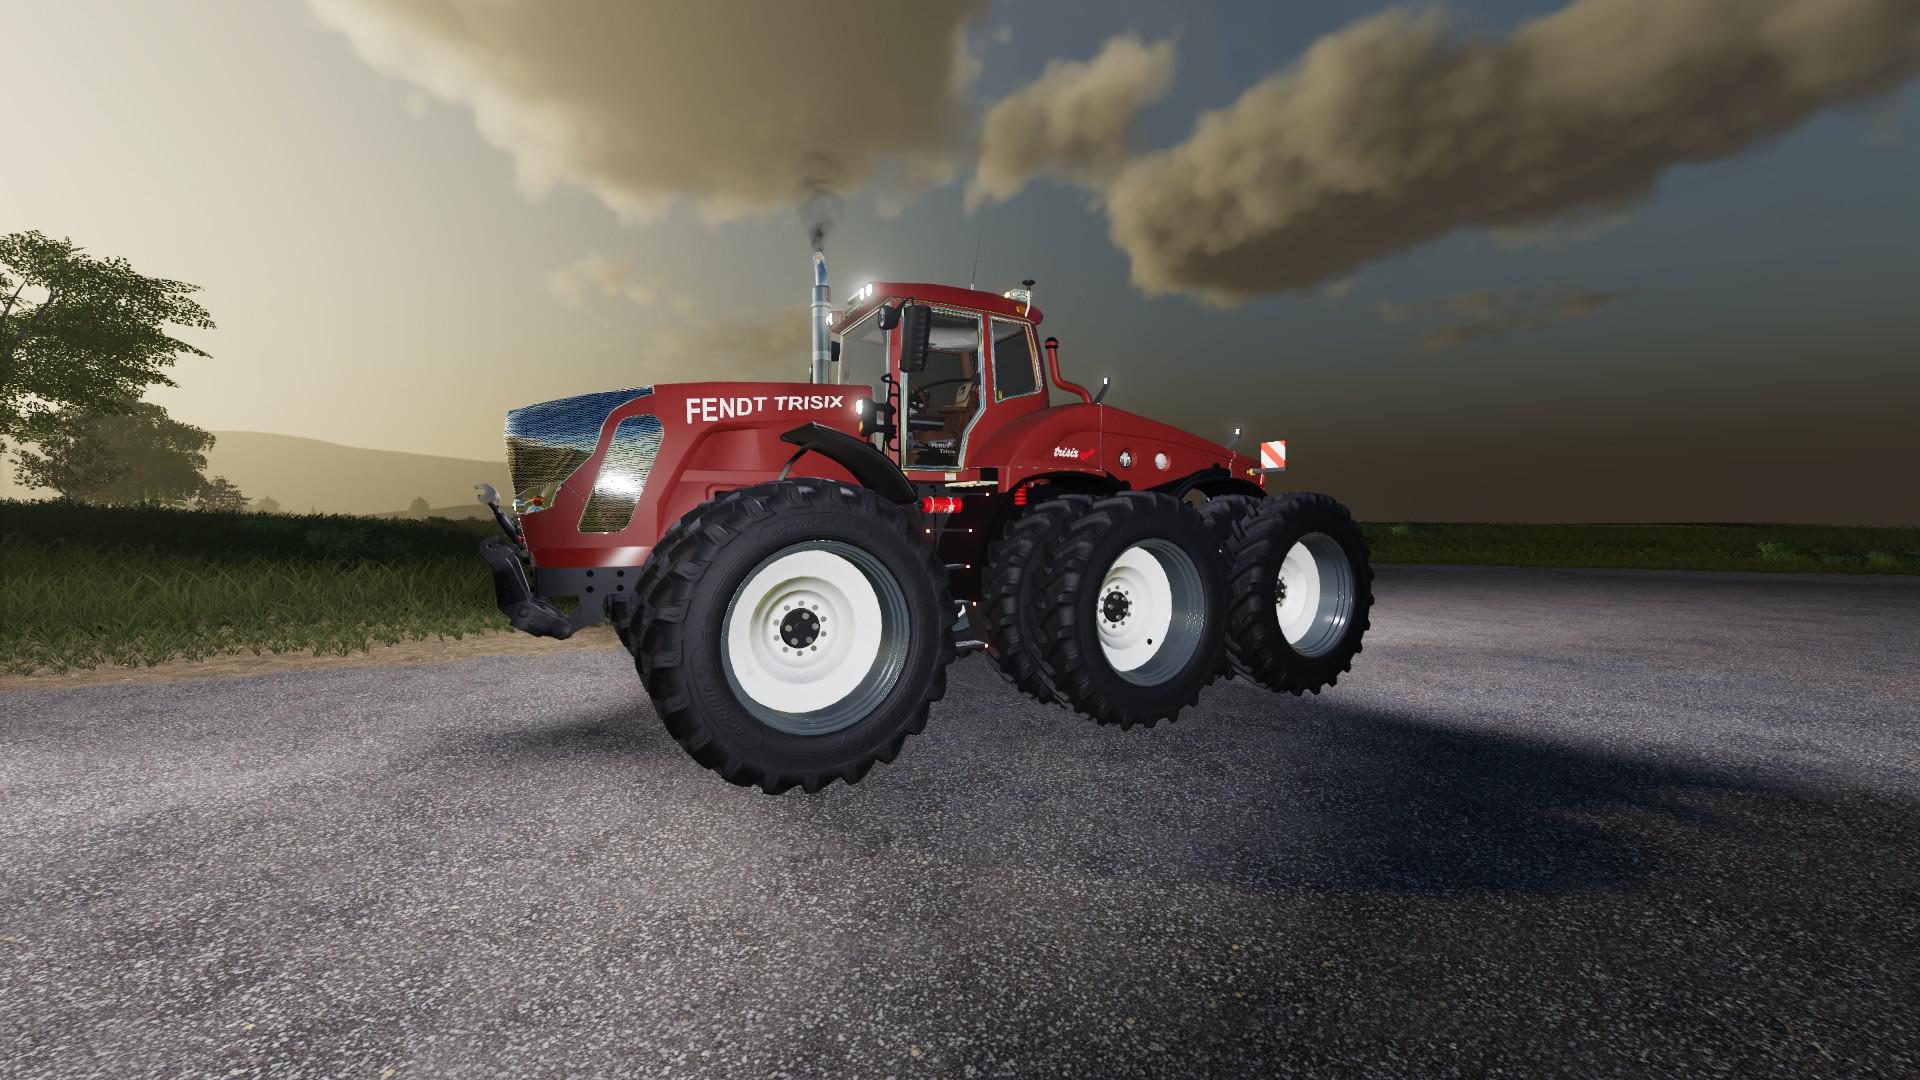 Fs19 Fendt Trisix Tractor V23 Farming Simulator 19 Modsclub 8700